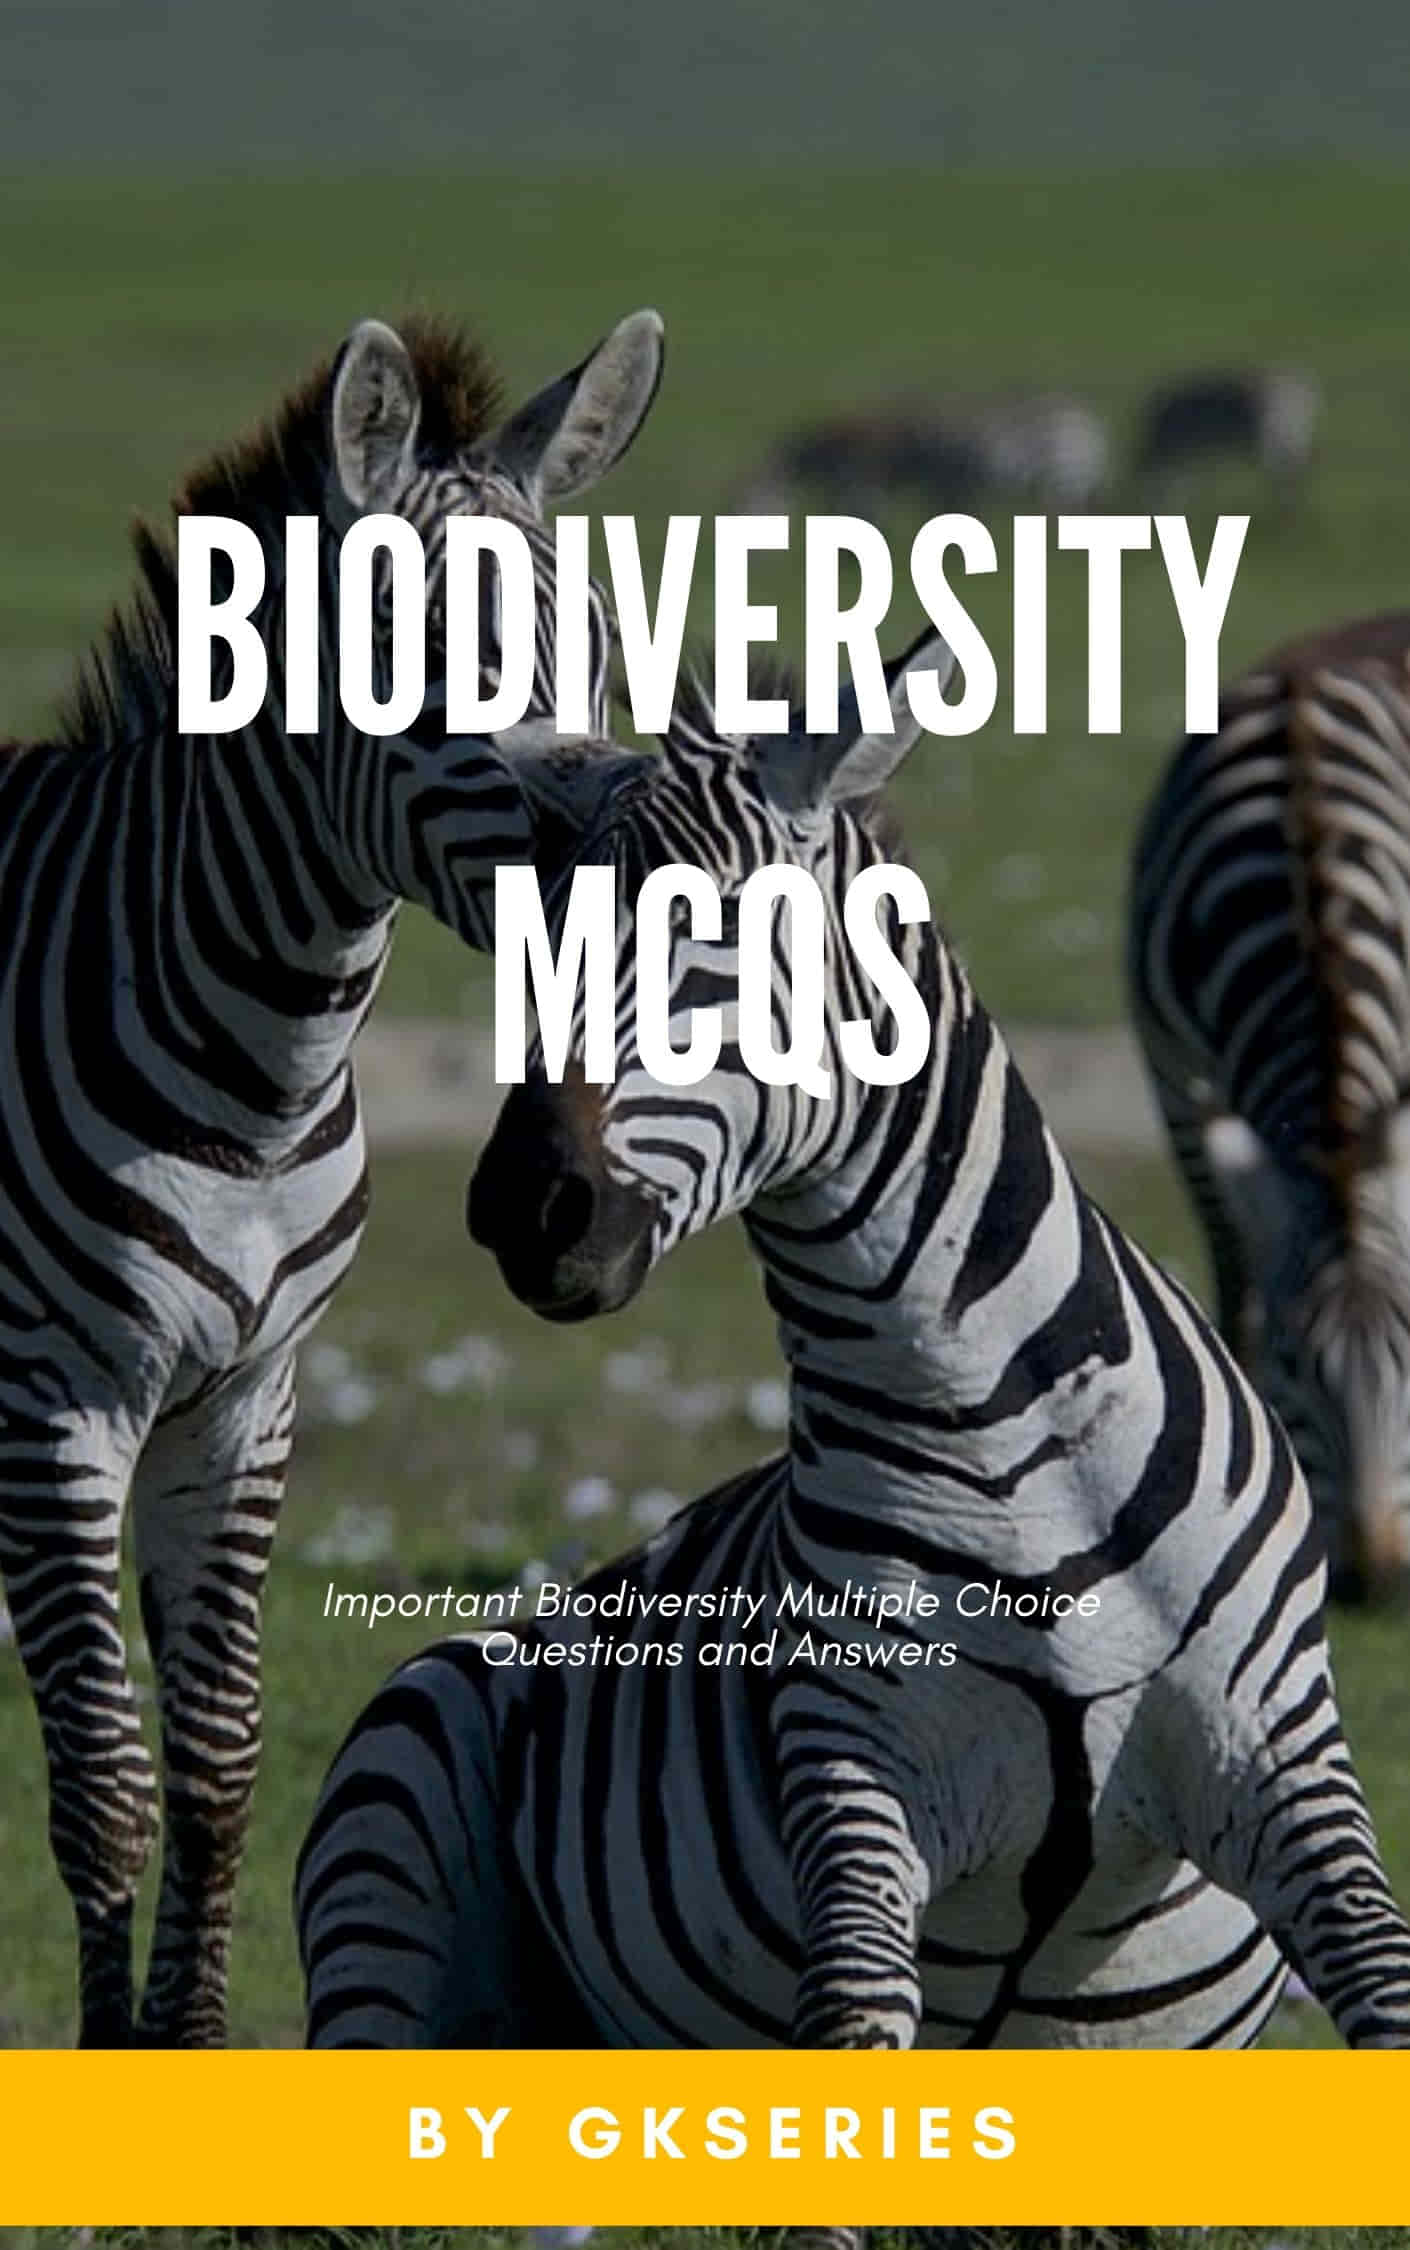 Biodiversity pdf ebook